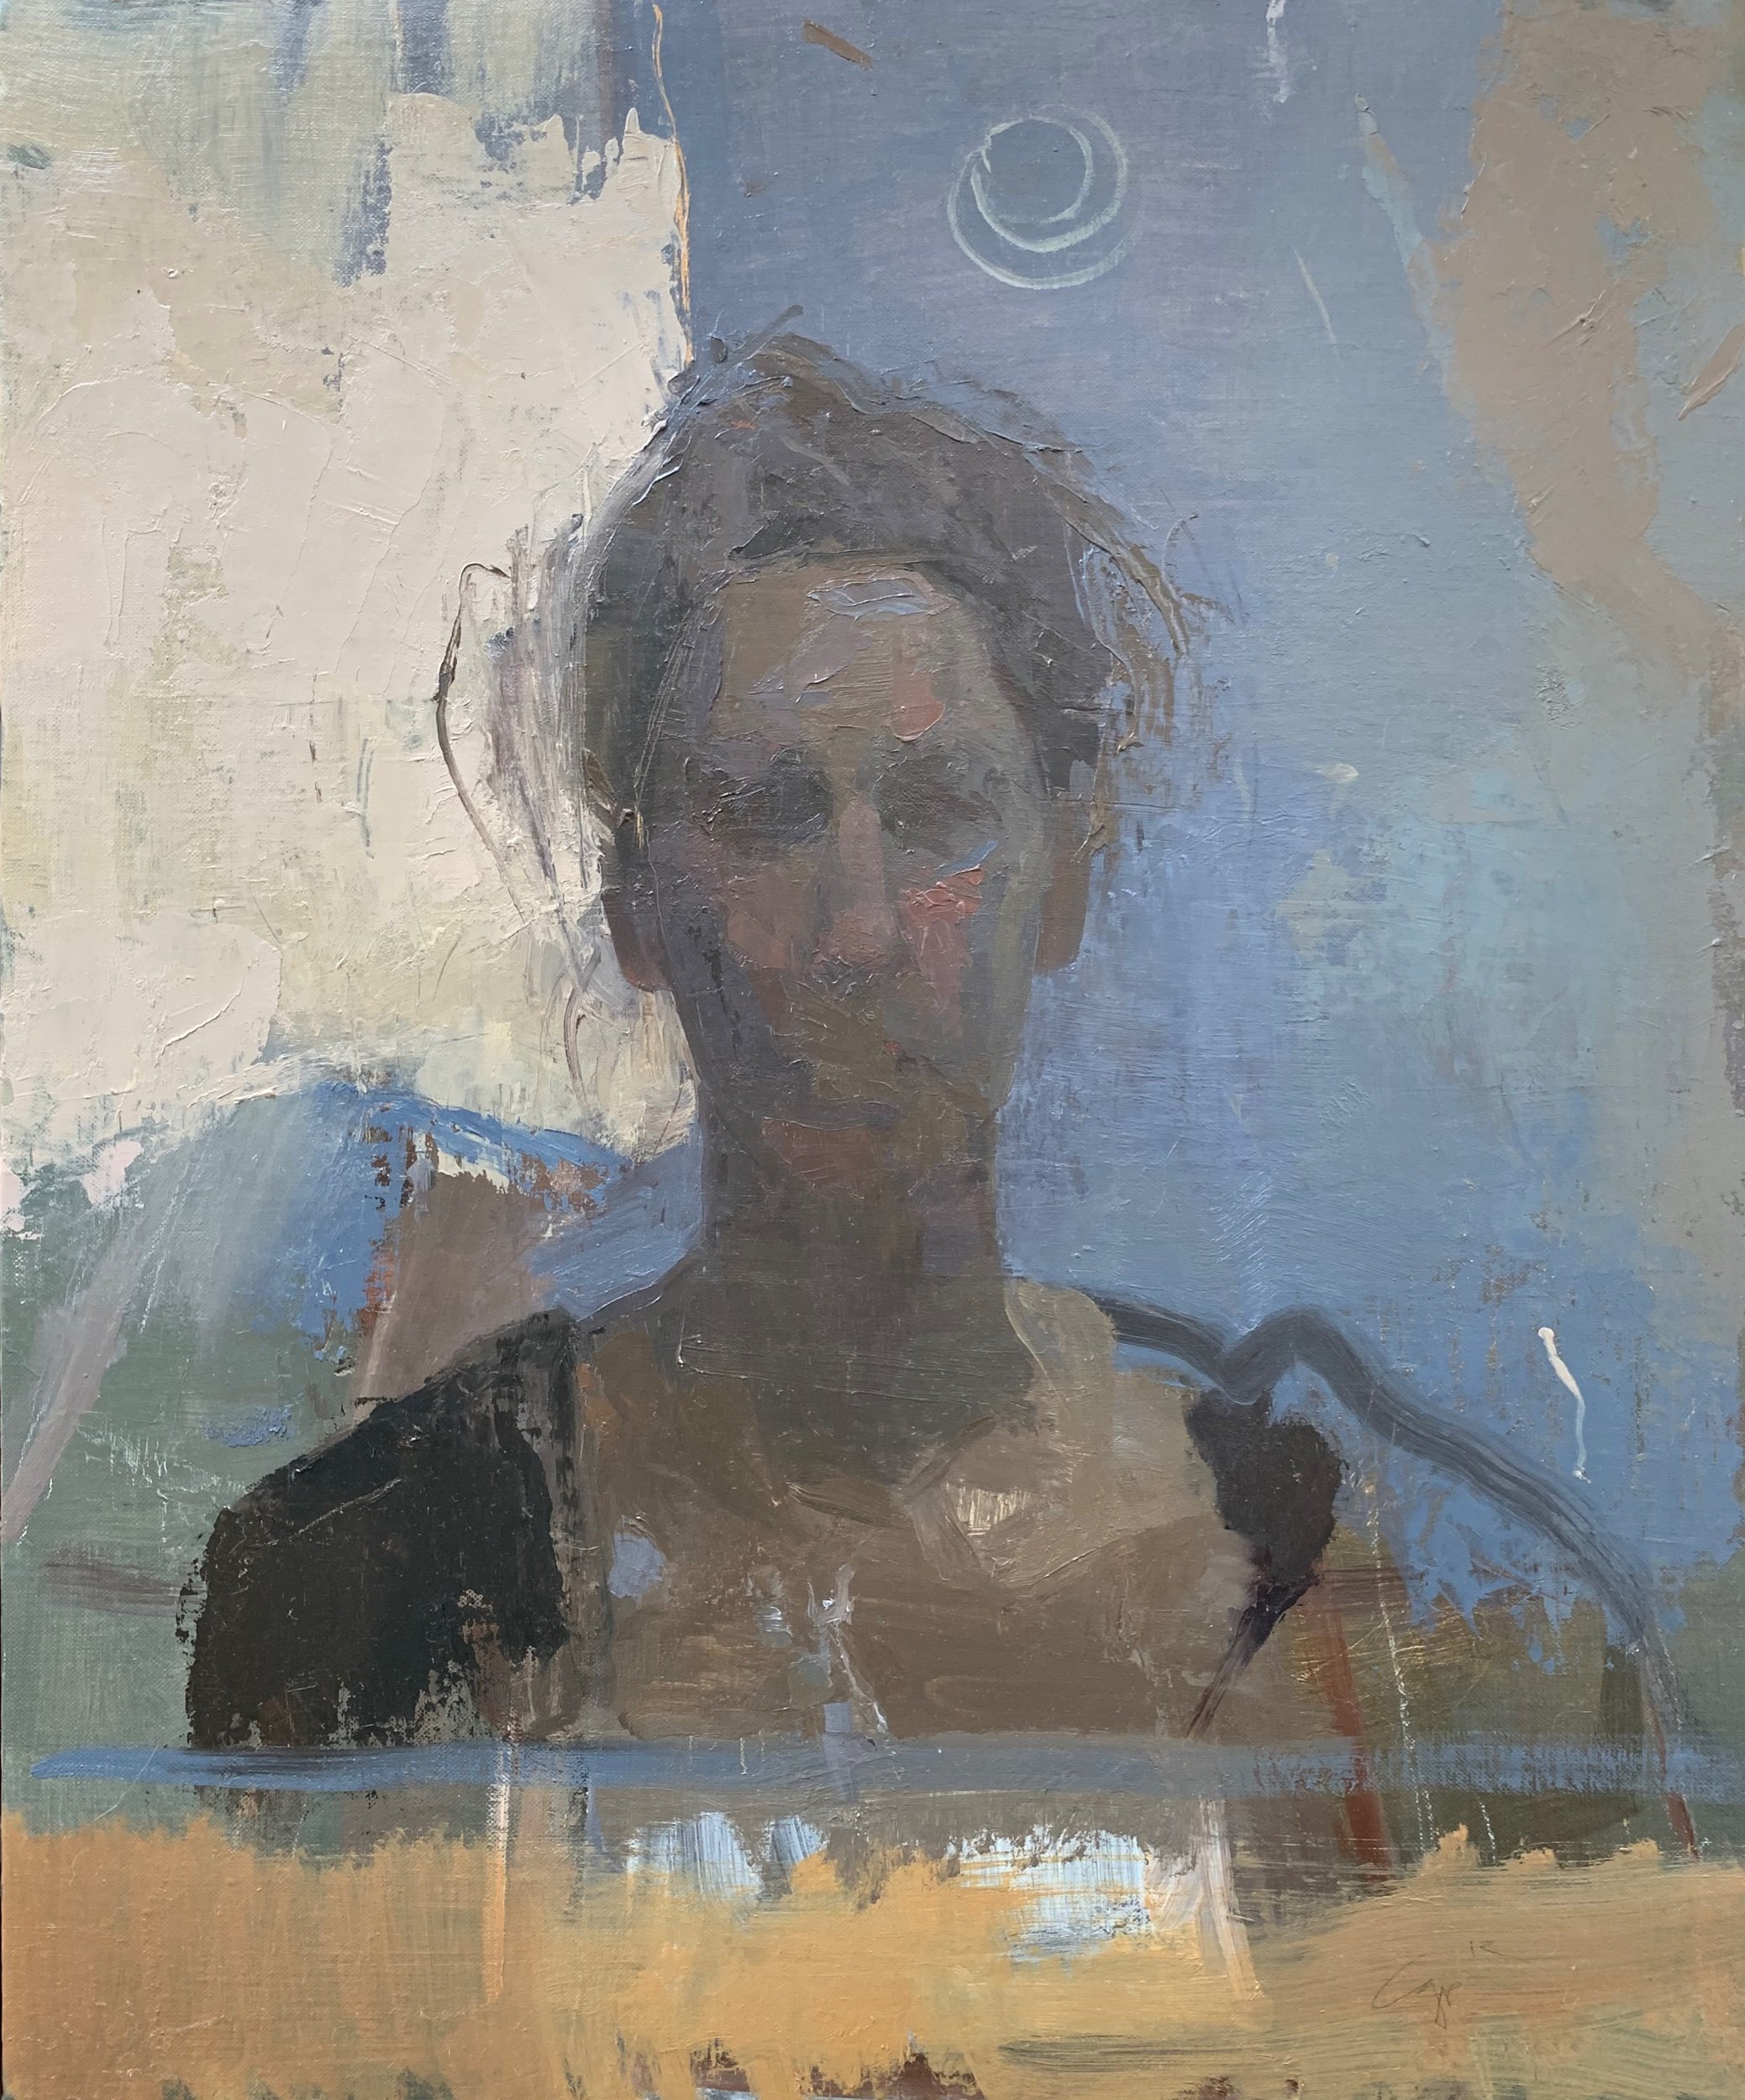   Blue self-portrait   2012  22” x 18”  oil on linen 